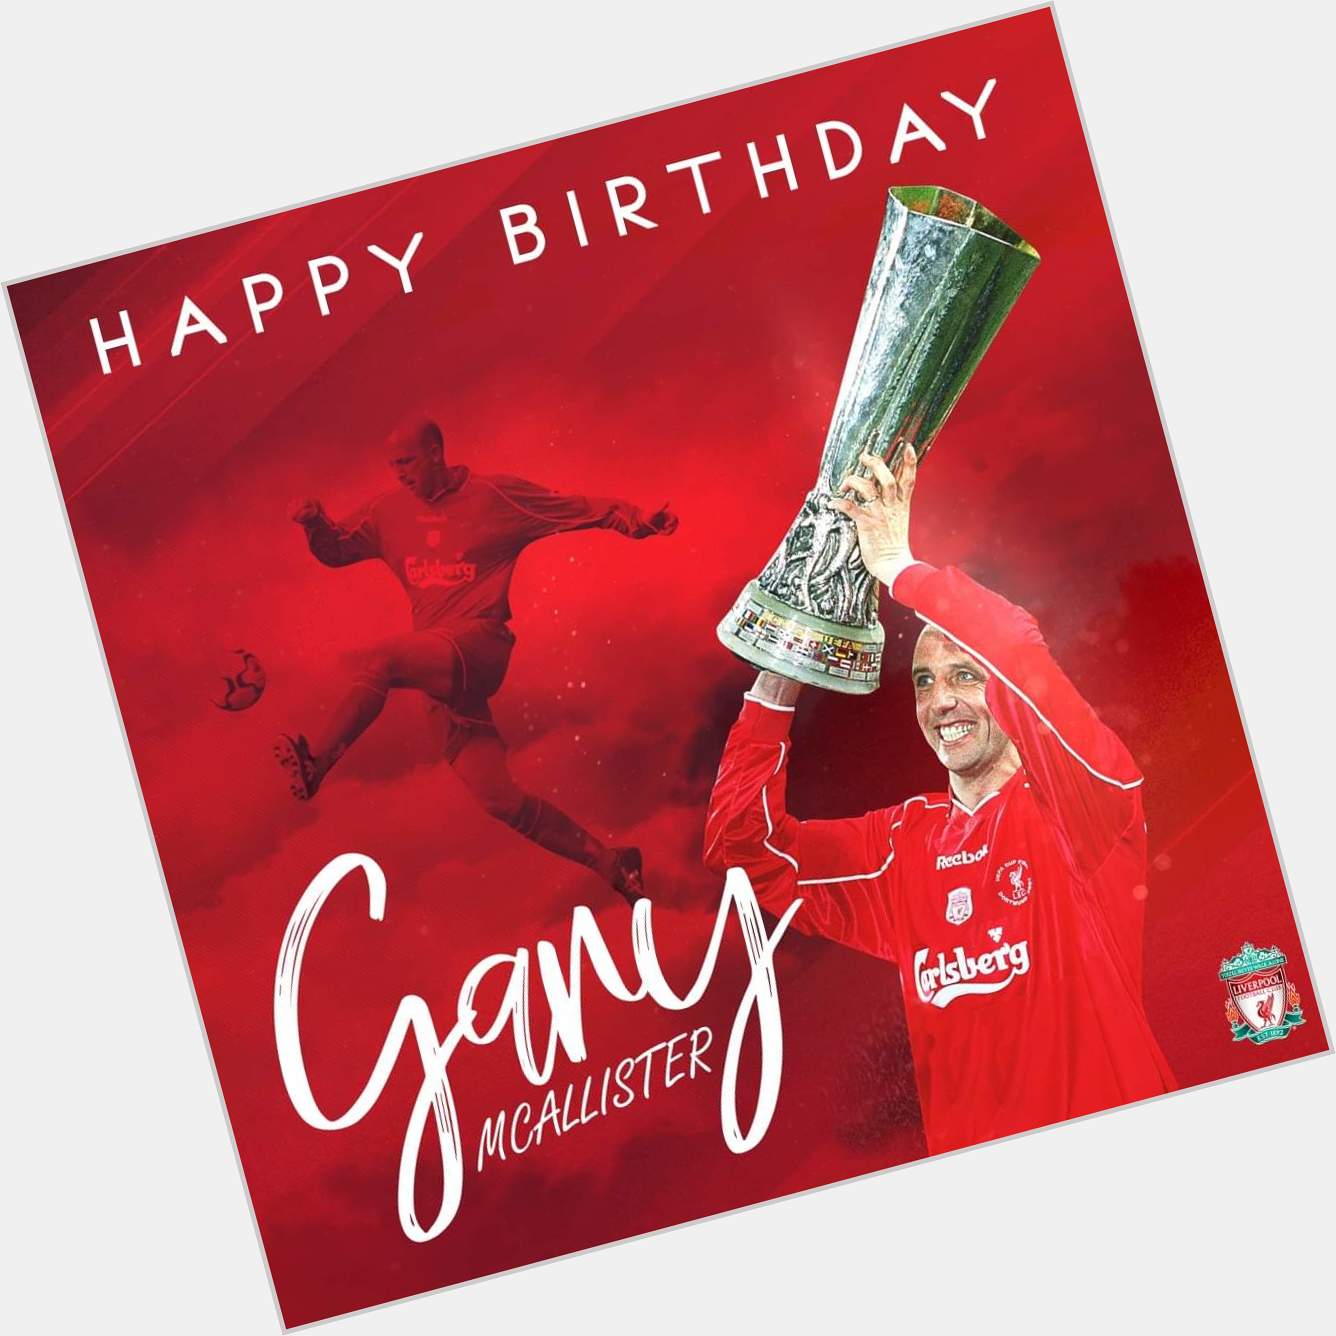 Happy birthday Gary McAllister    